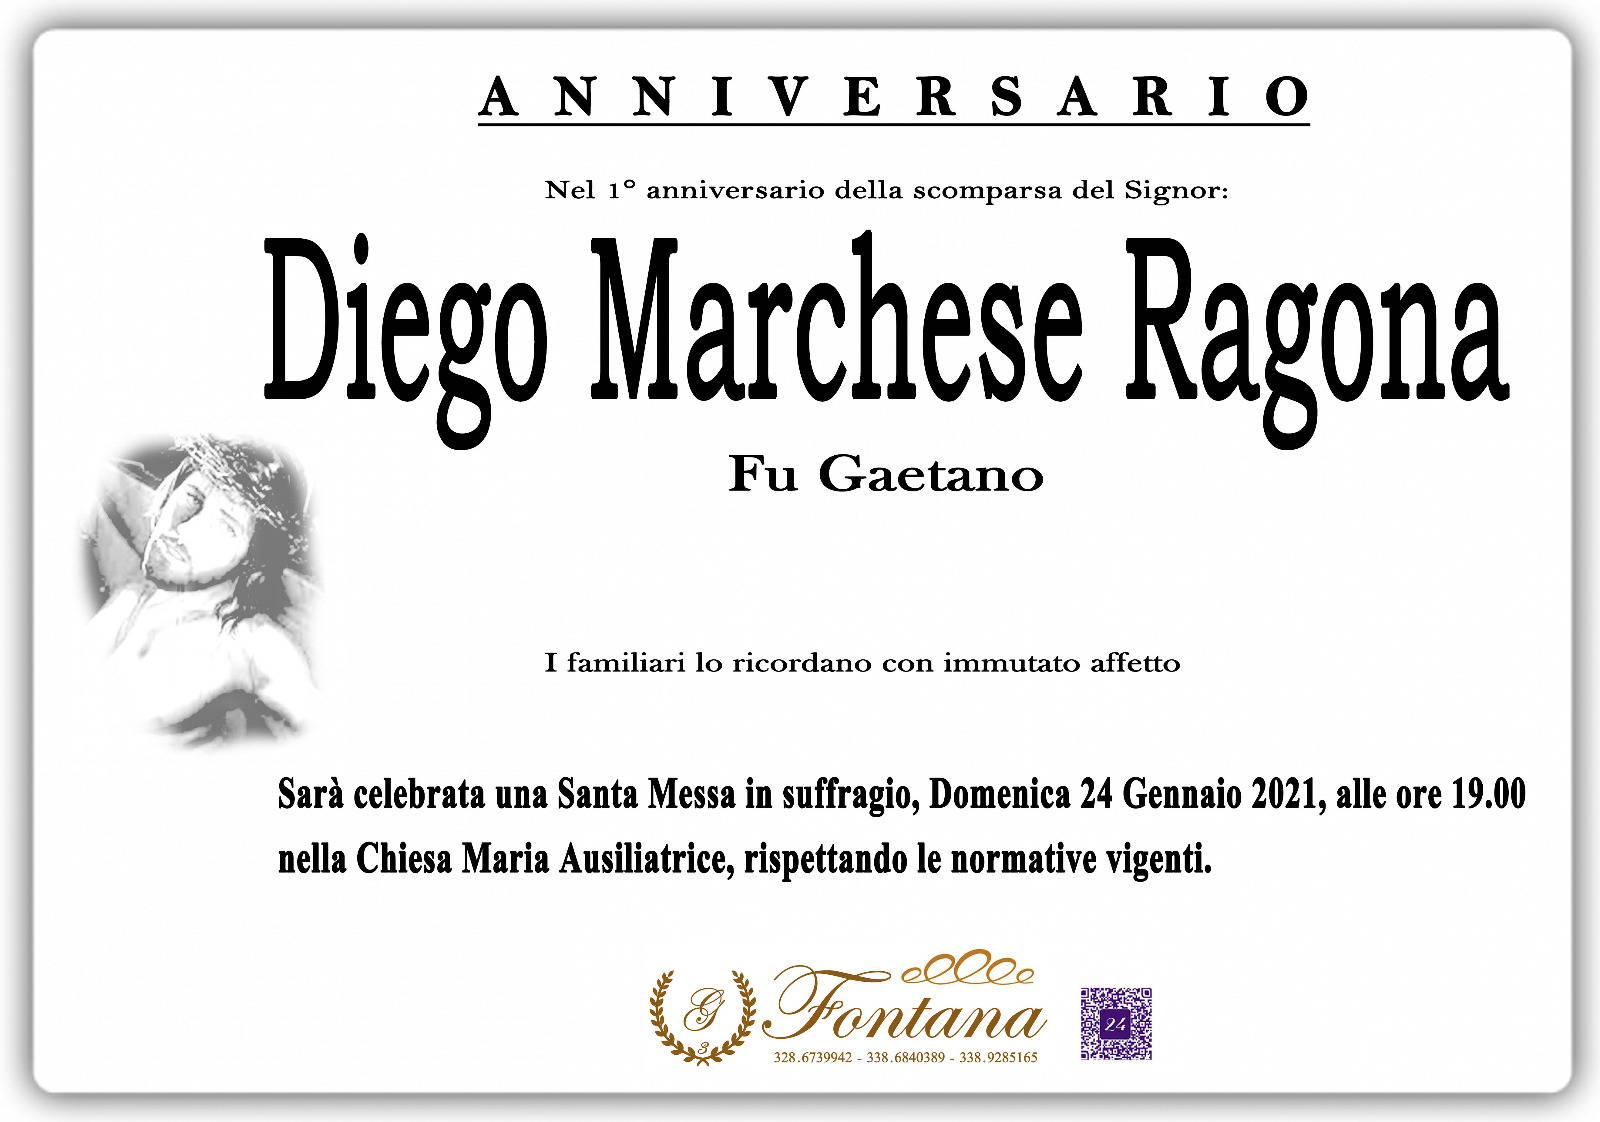 Diego Marchese Ragona